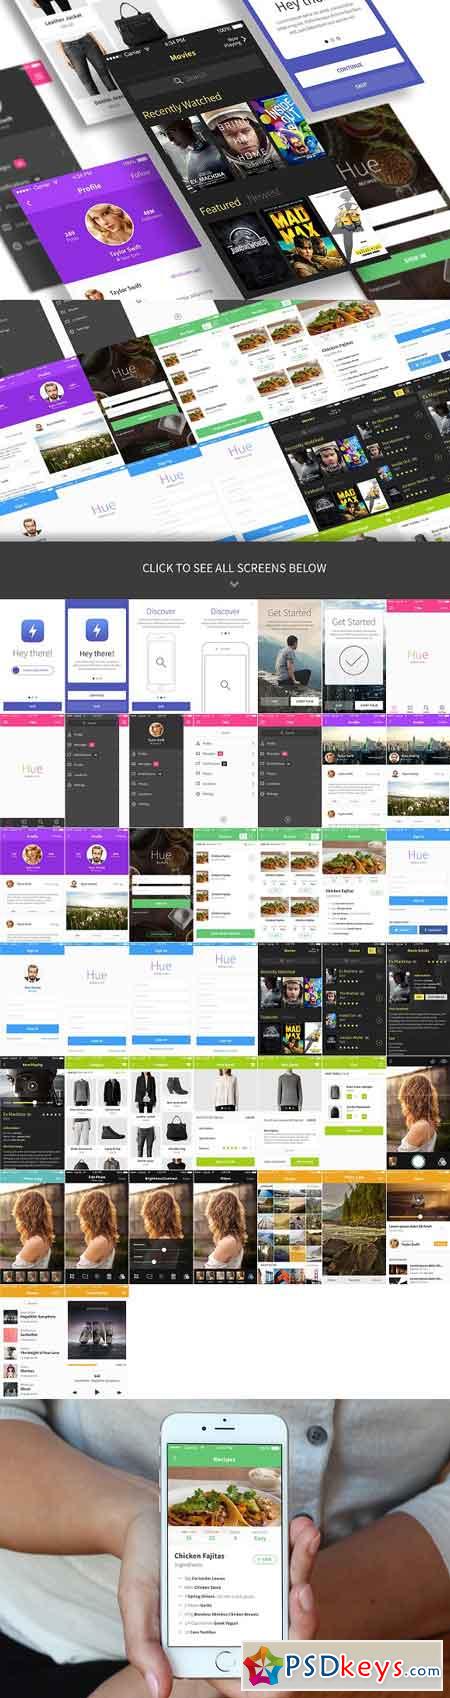 Hue - 44 Mobile App UI Screens